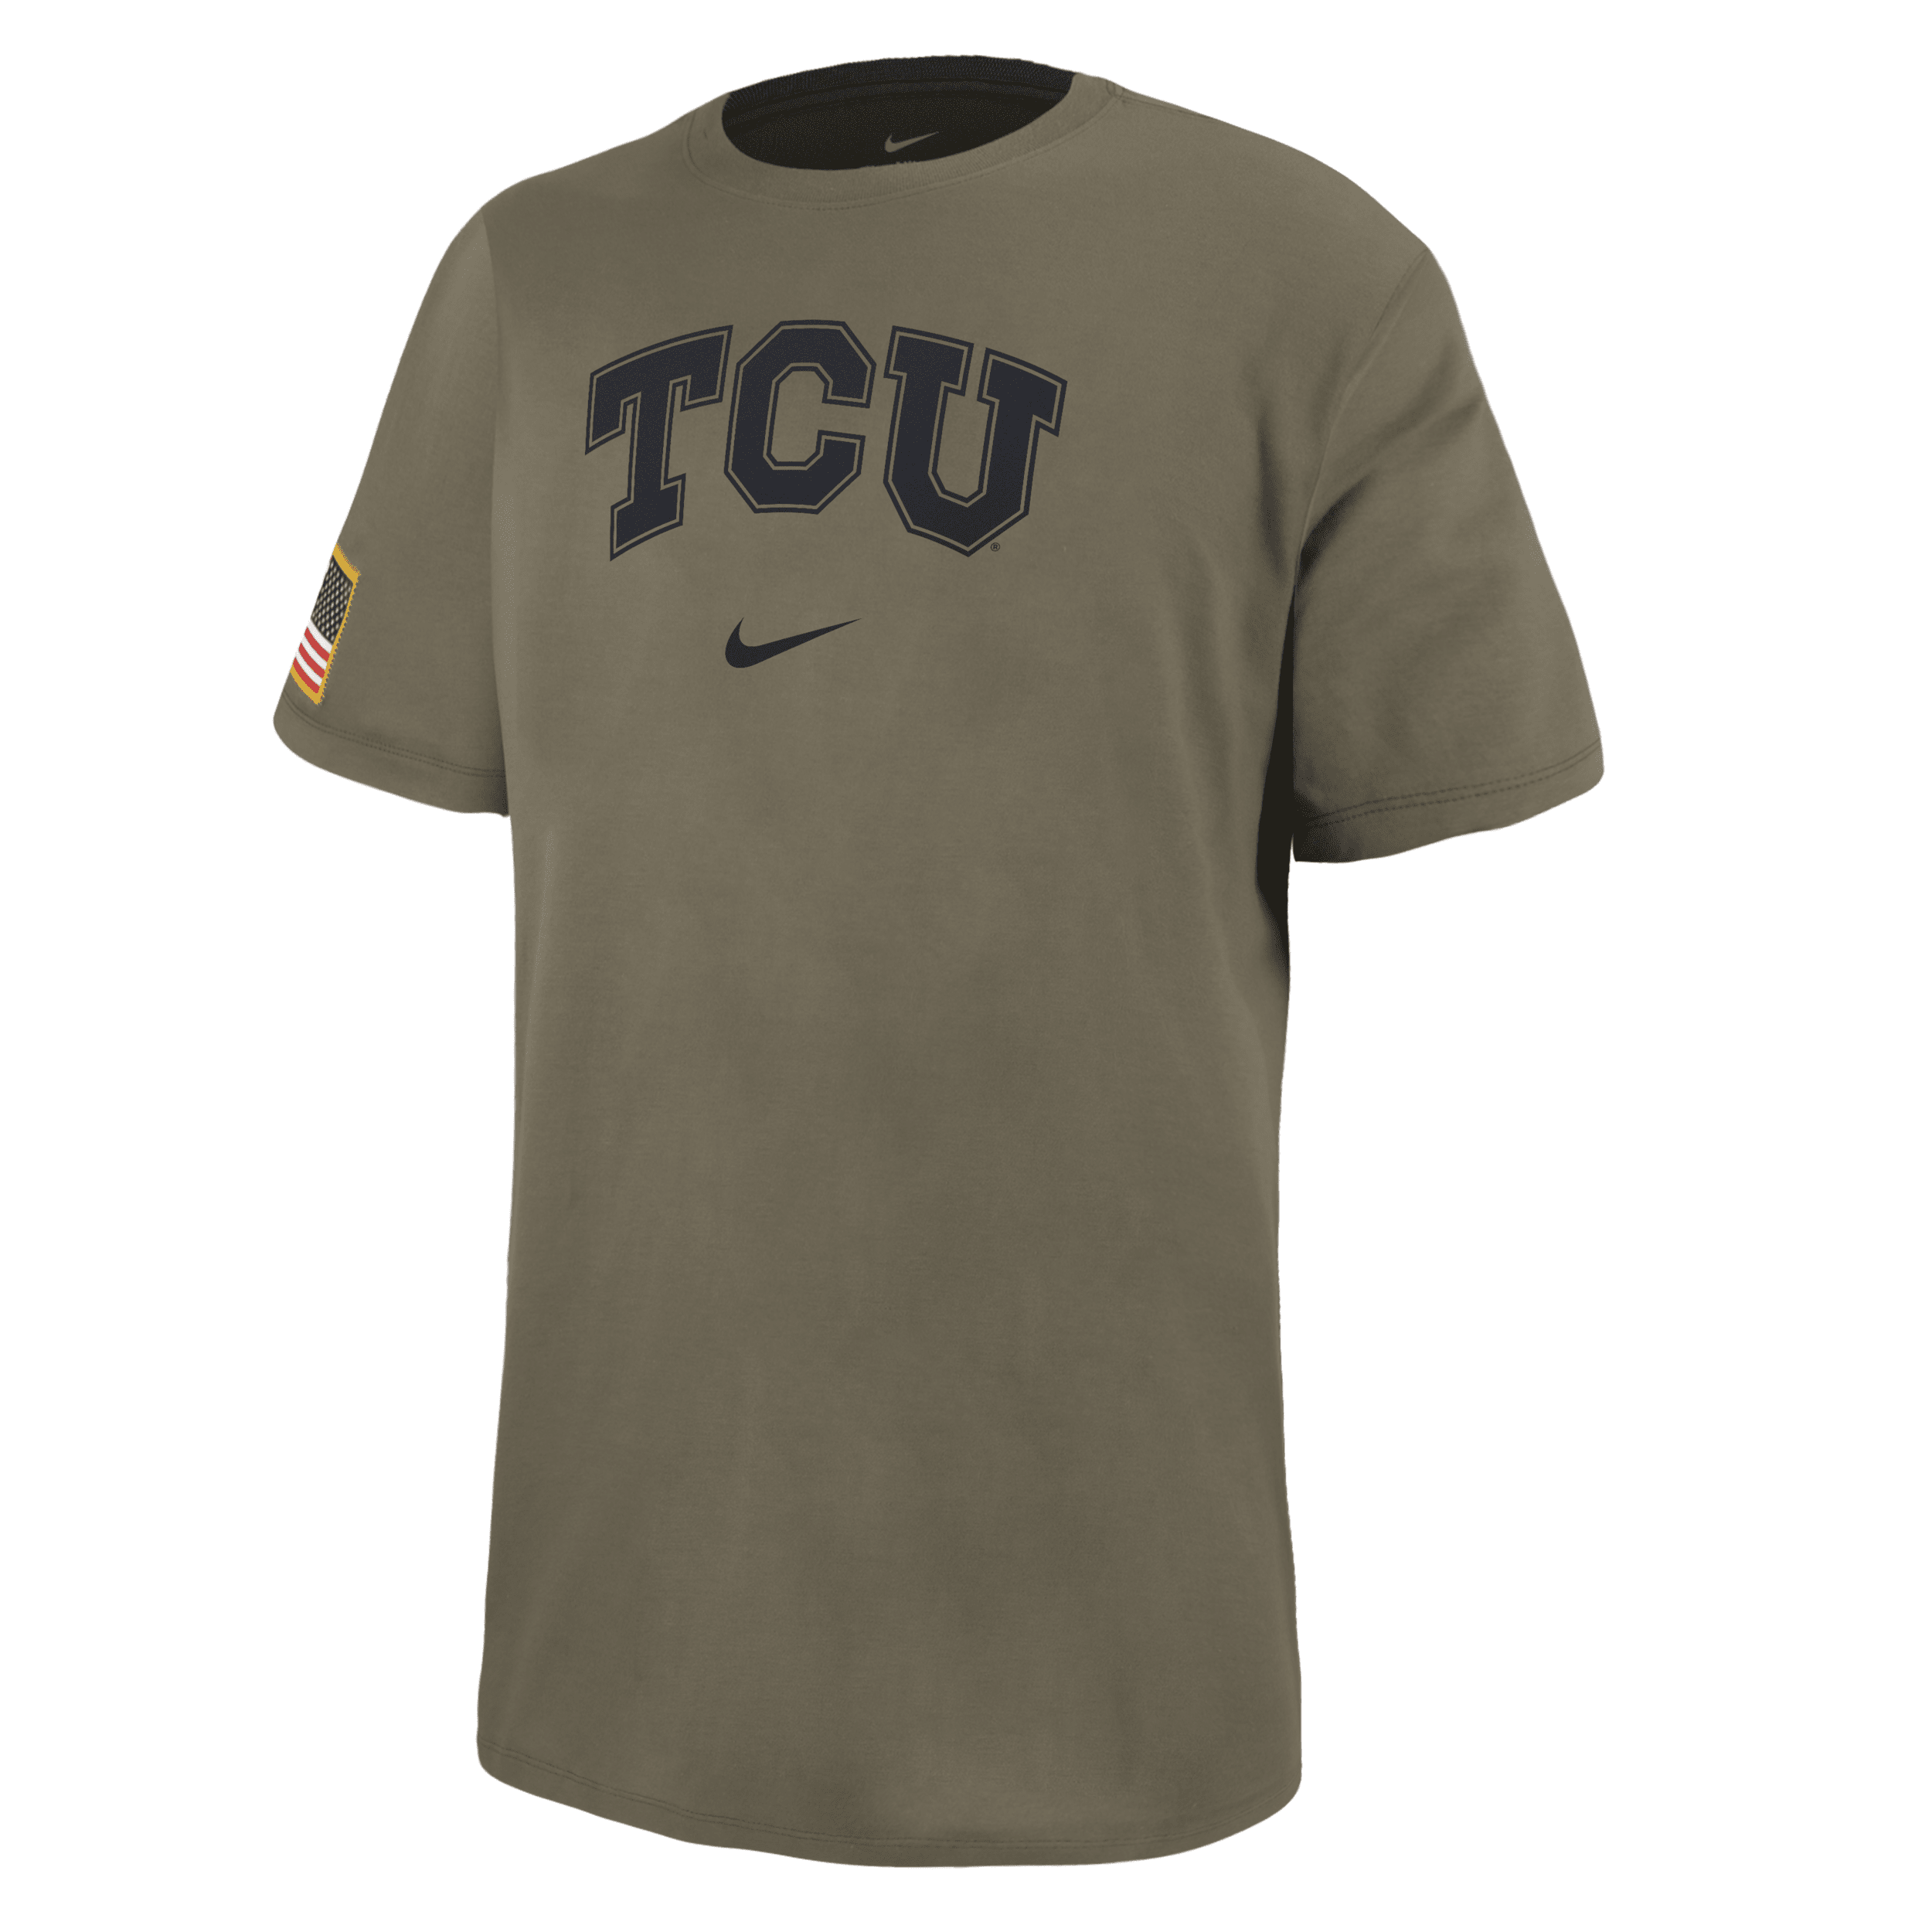 Nike Tcu  Men's College T-shirt In Brown